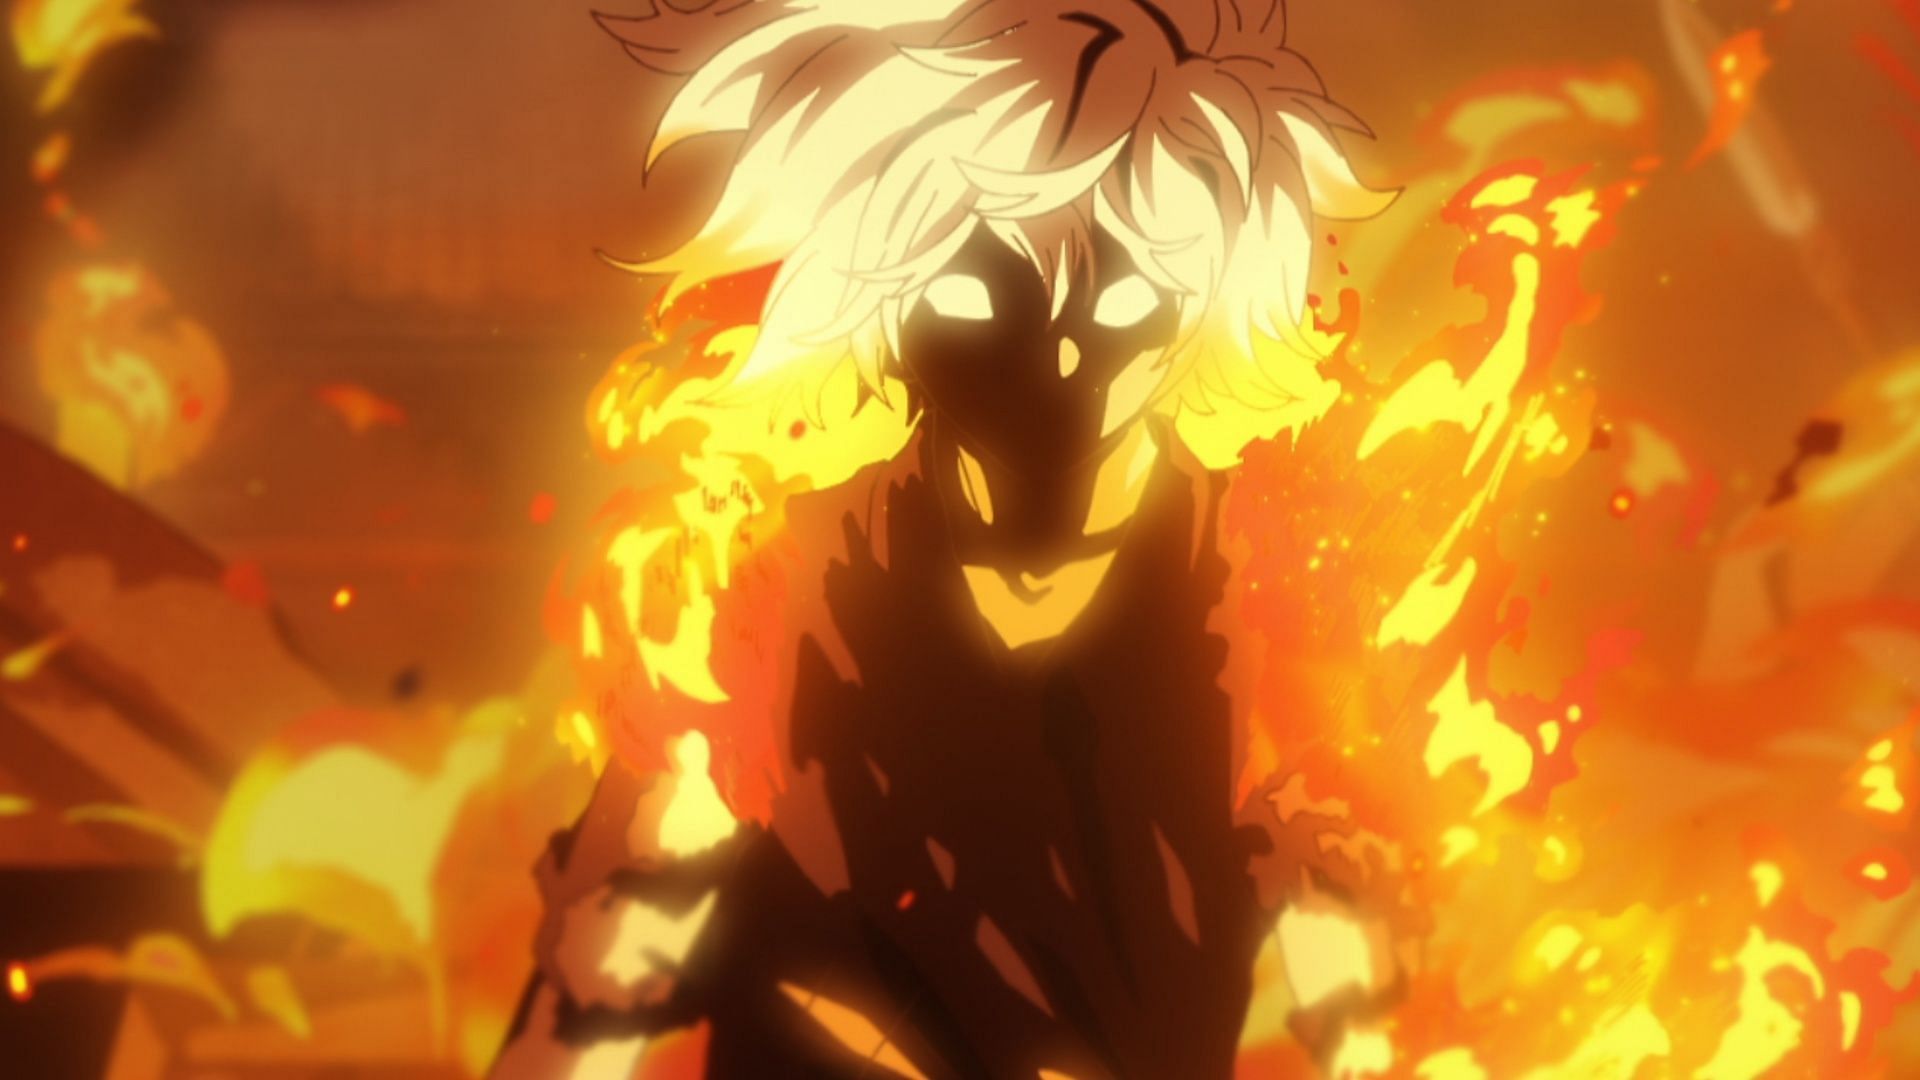 Fire so pretty aint it, #hellsparadise #gabimaru #anime #mangaedit #